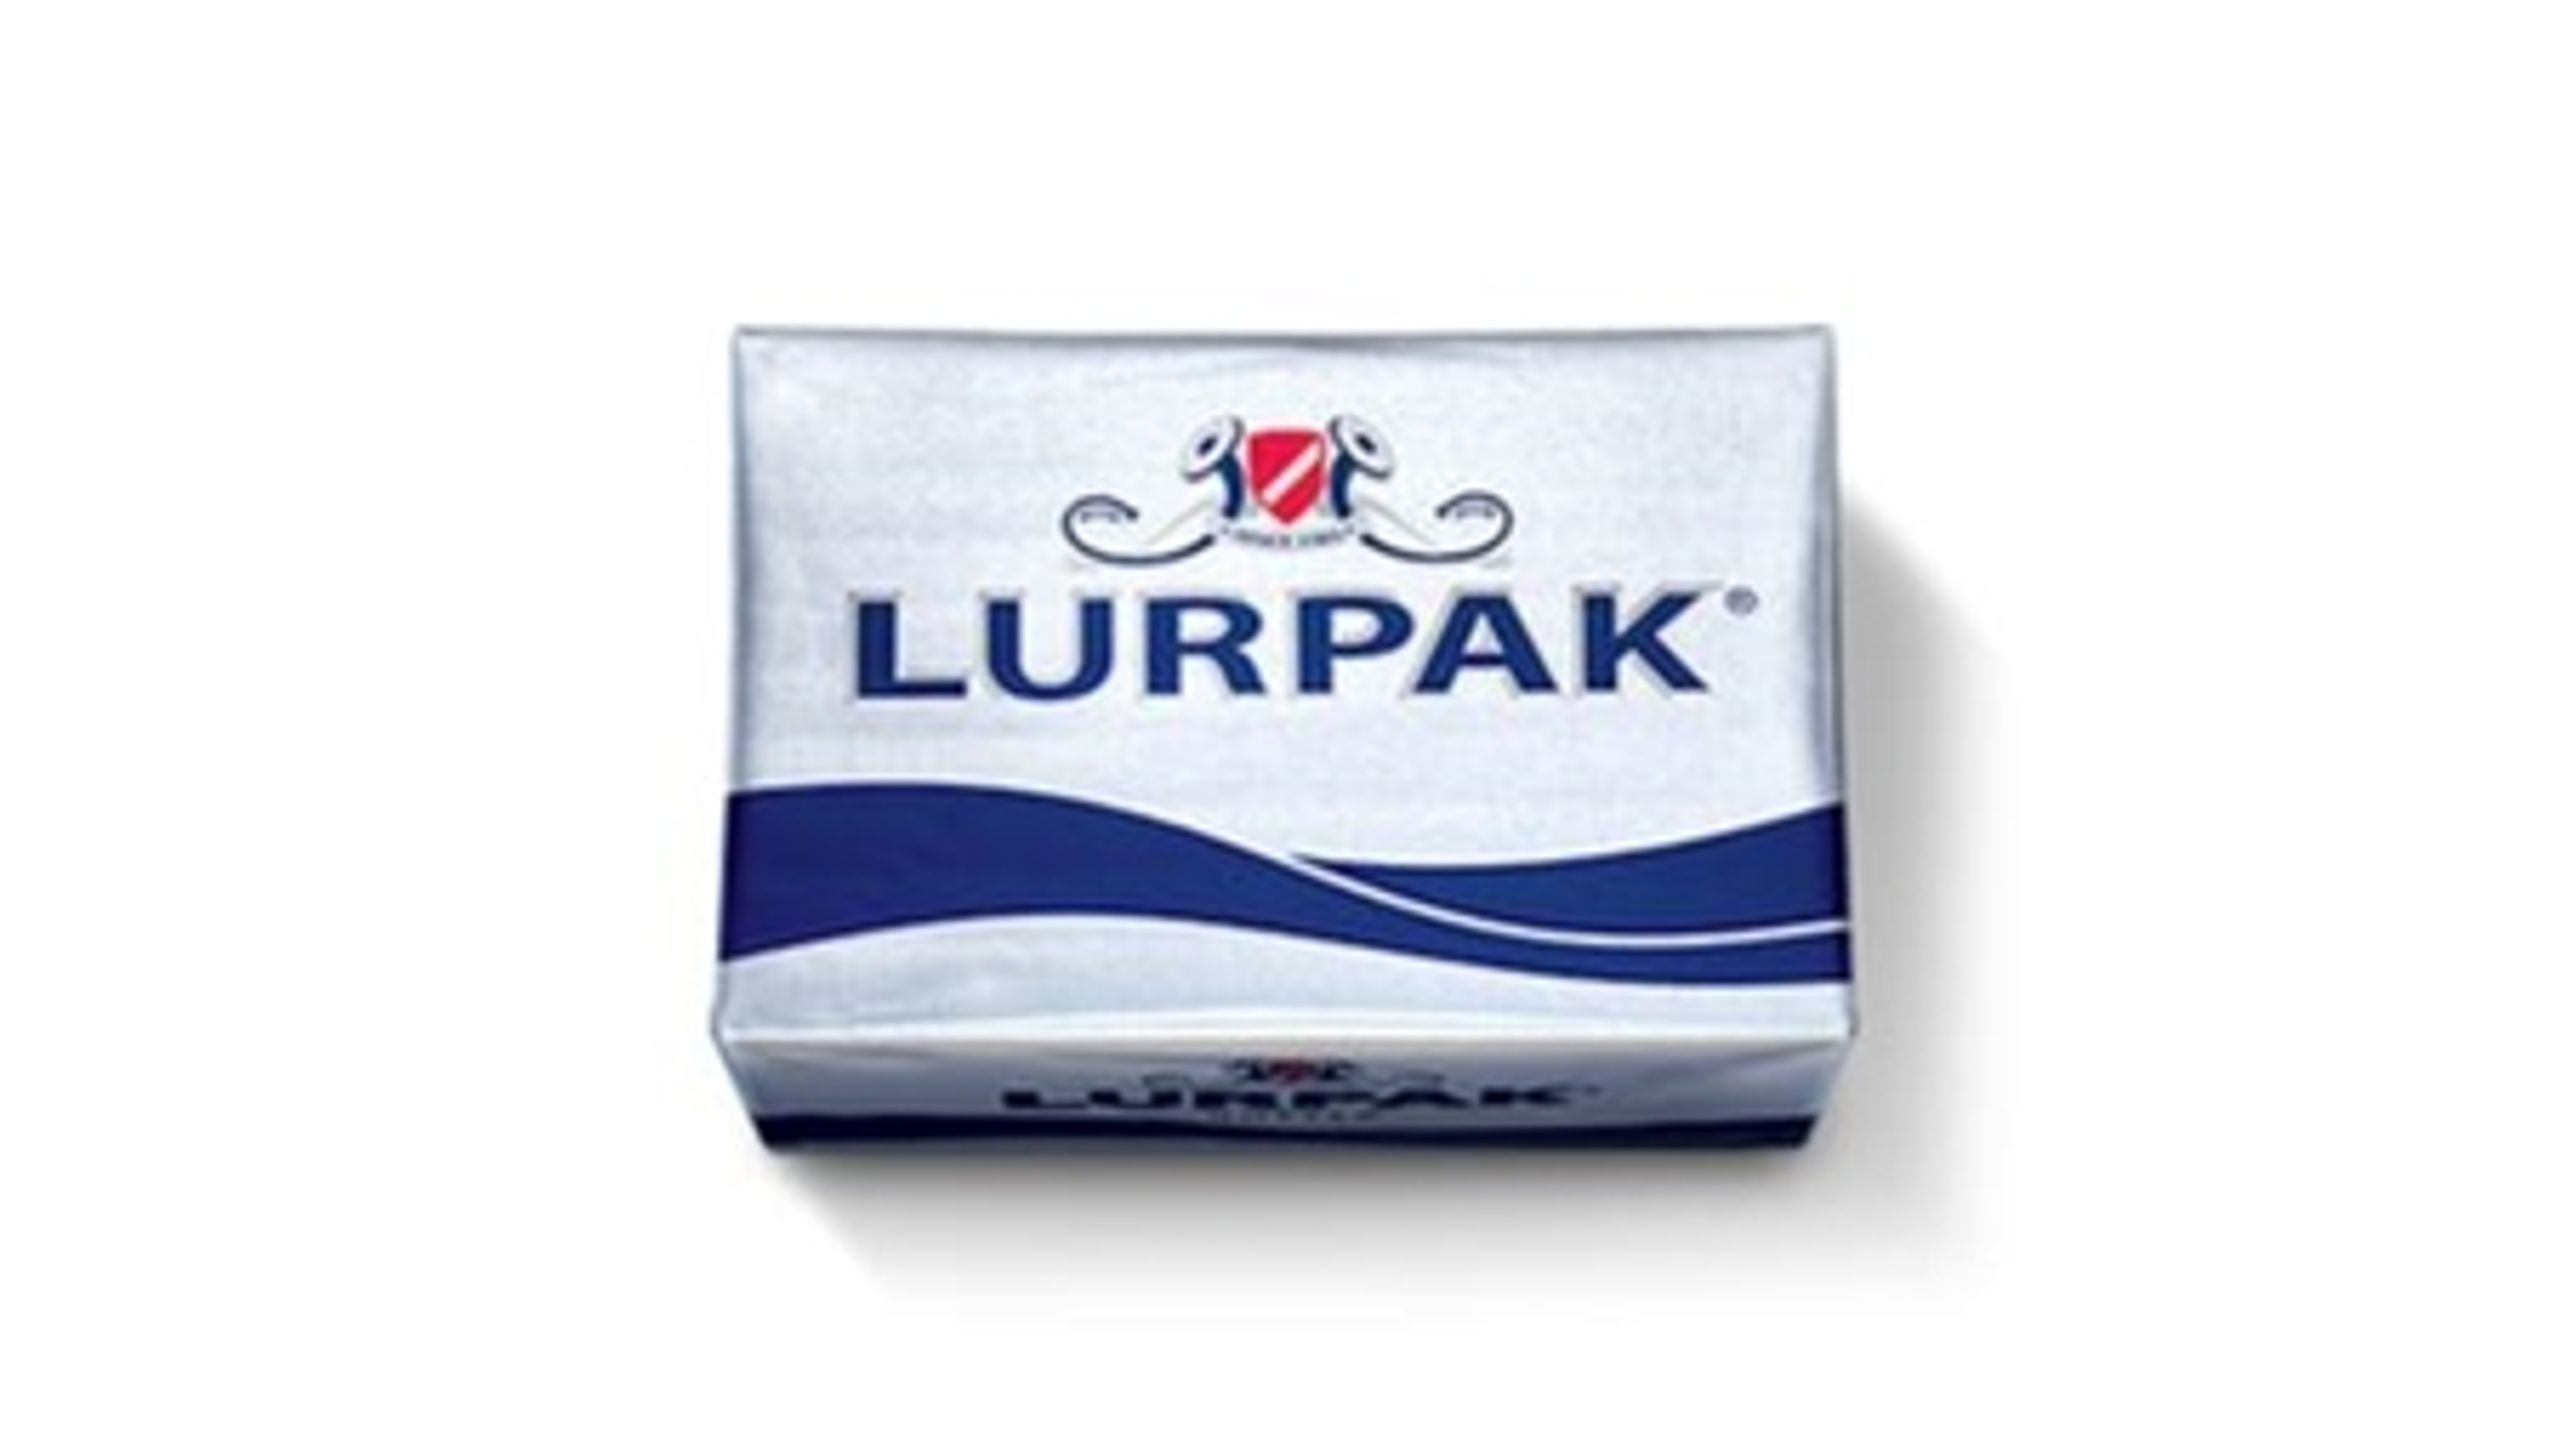 Arla markedsfører blandingsproduktet Lurpark Smørbar på en vildledende måde, så forbrugerne tror, at det er smør. Det mener Magarineforeningen.